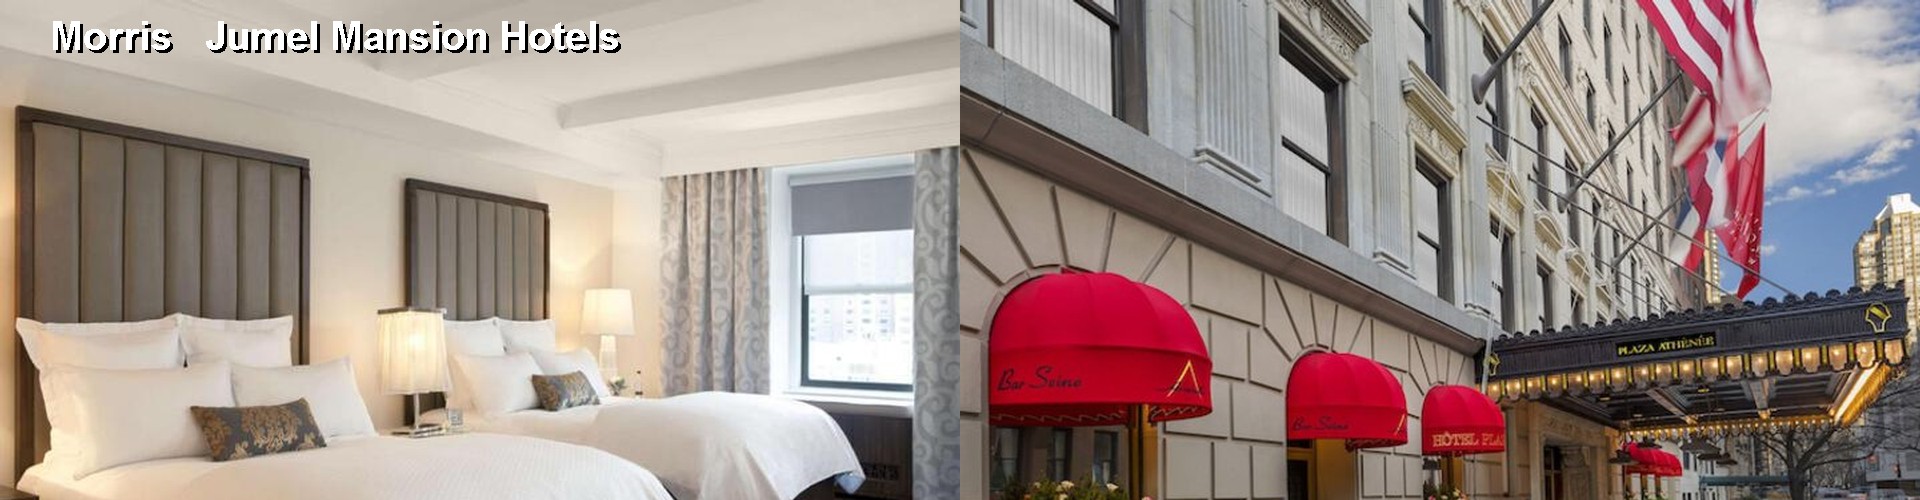 3 Best Hotels near Morris   Jumel Mansion